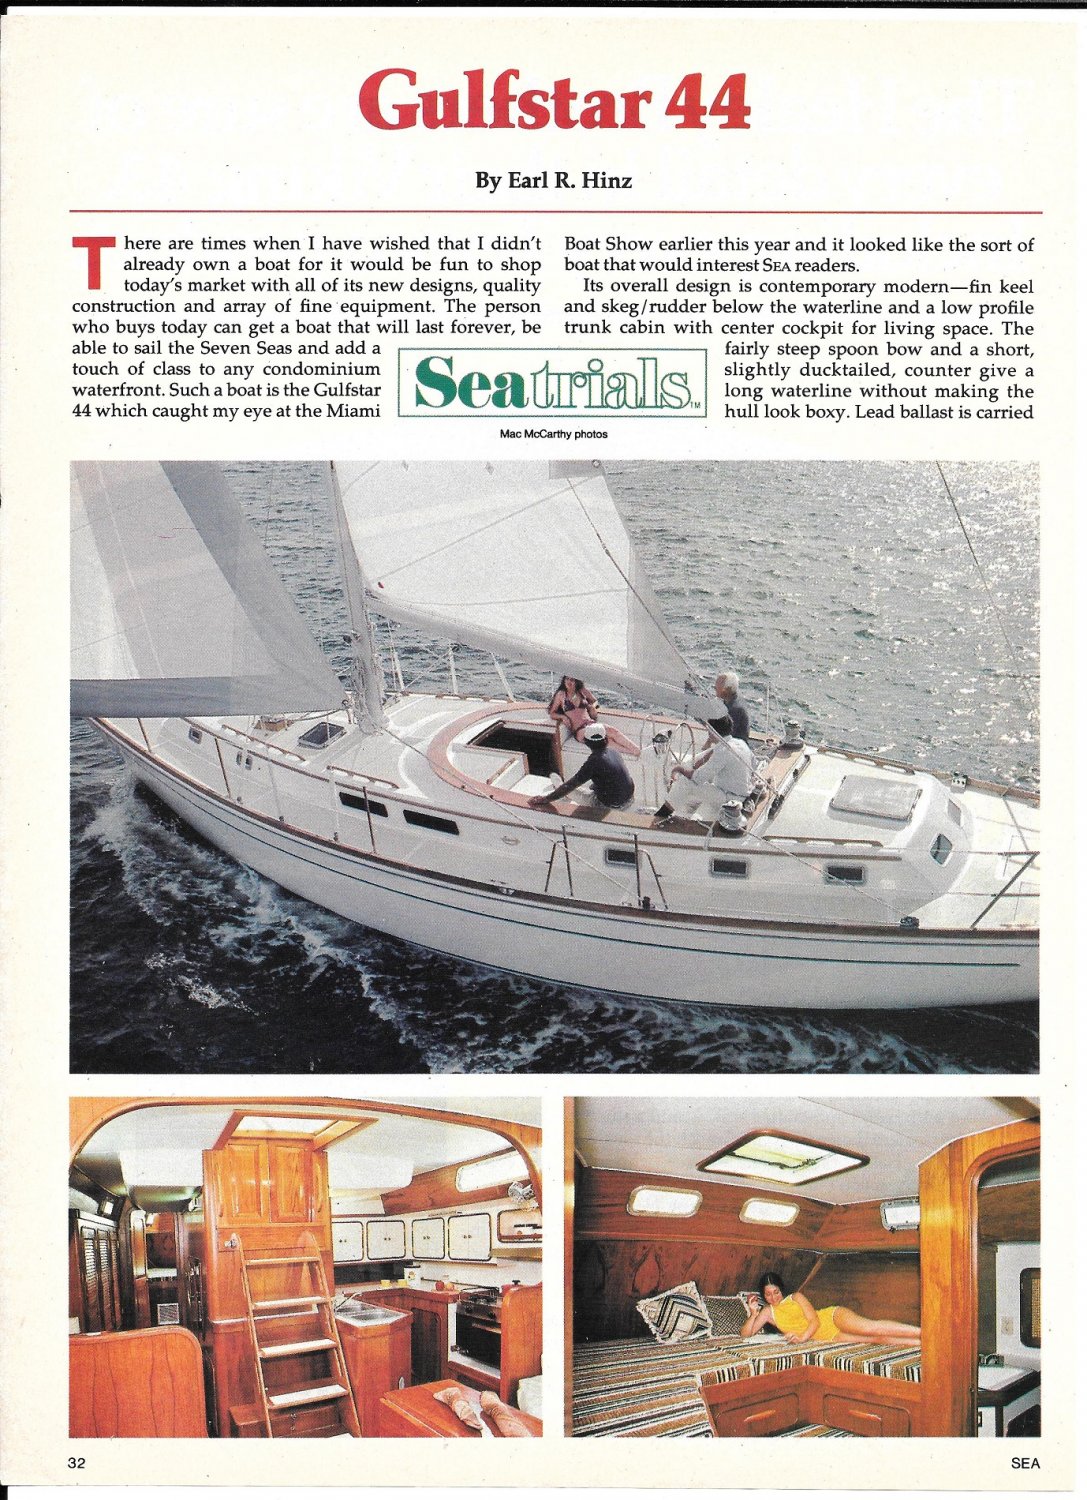 gulfstar 44 sailboat review